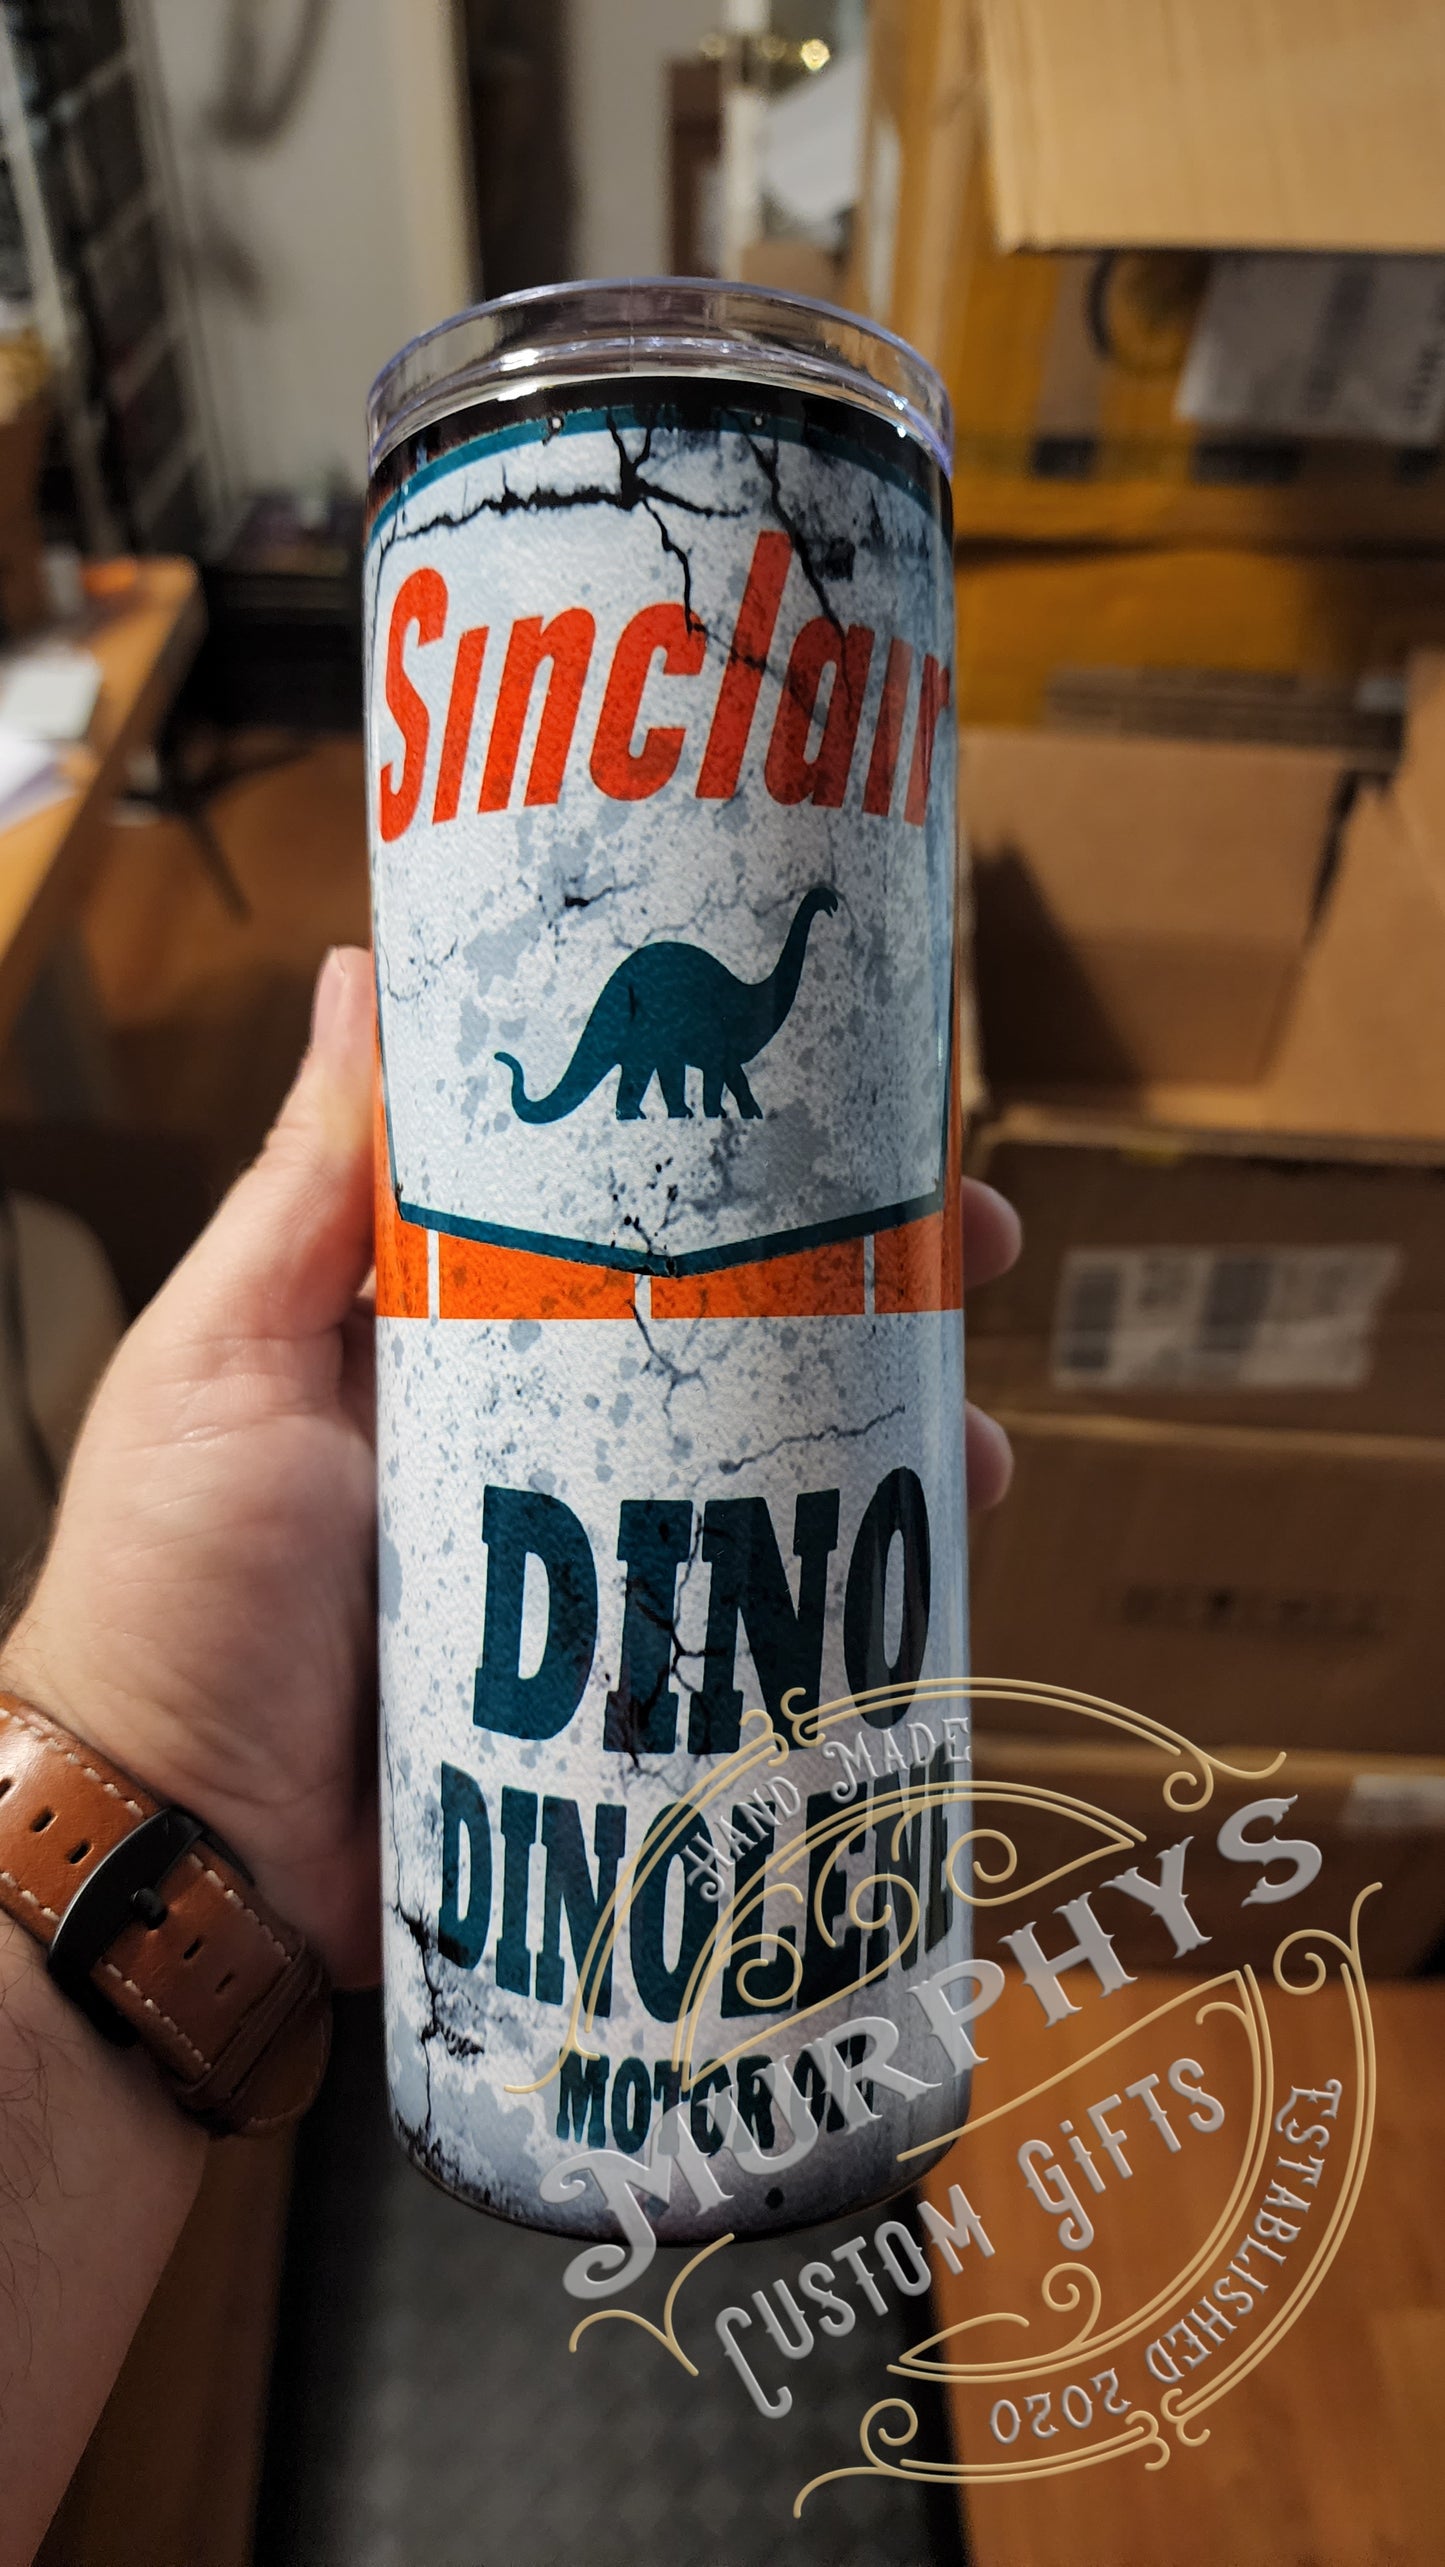 Sinclair Dino Motor Oil